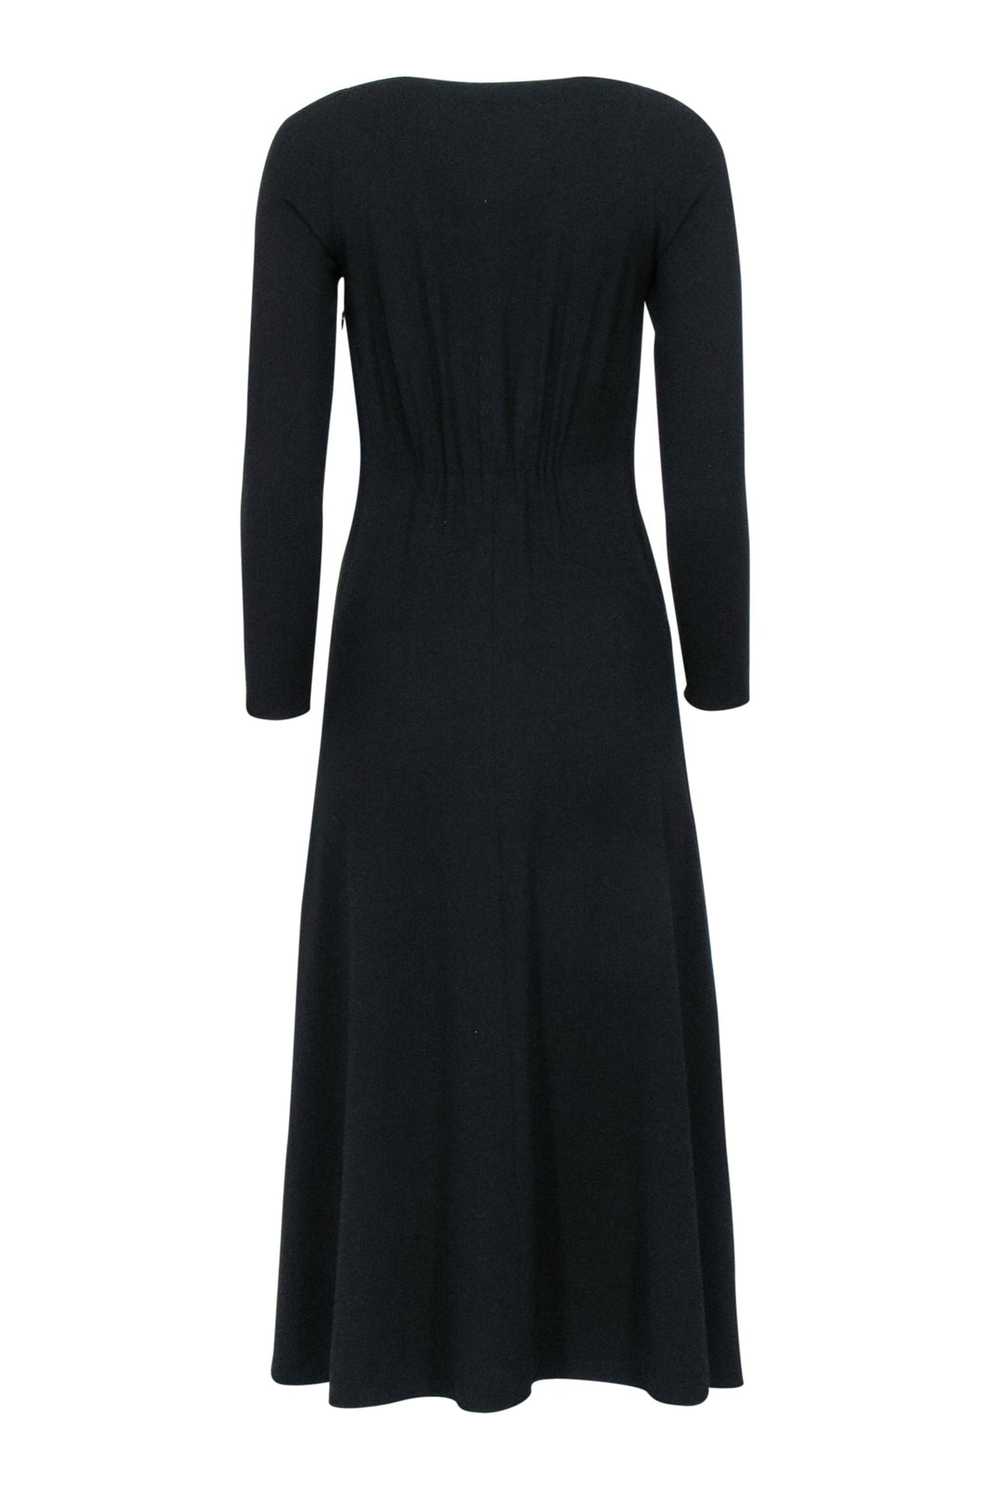 Vince - Black Long Sleeve Midi Dress Sz 0 - image 3